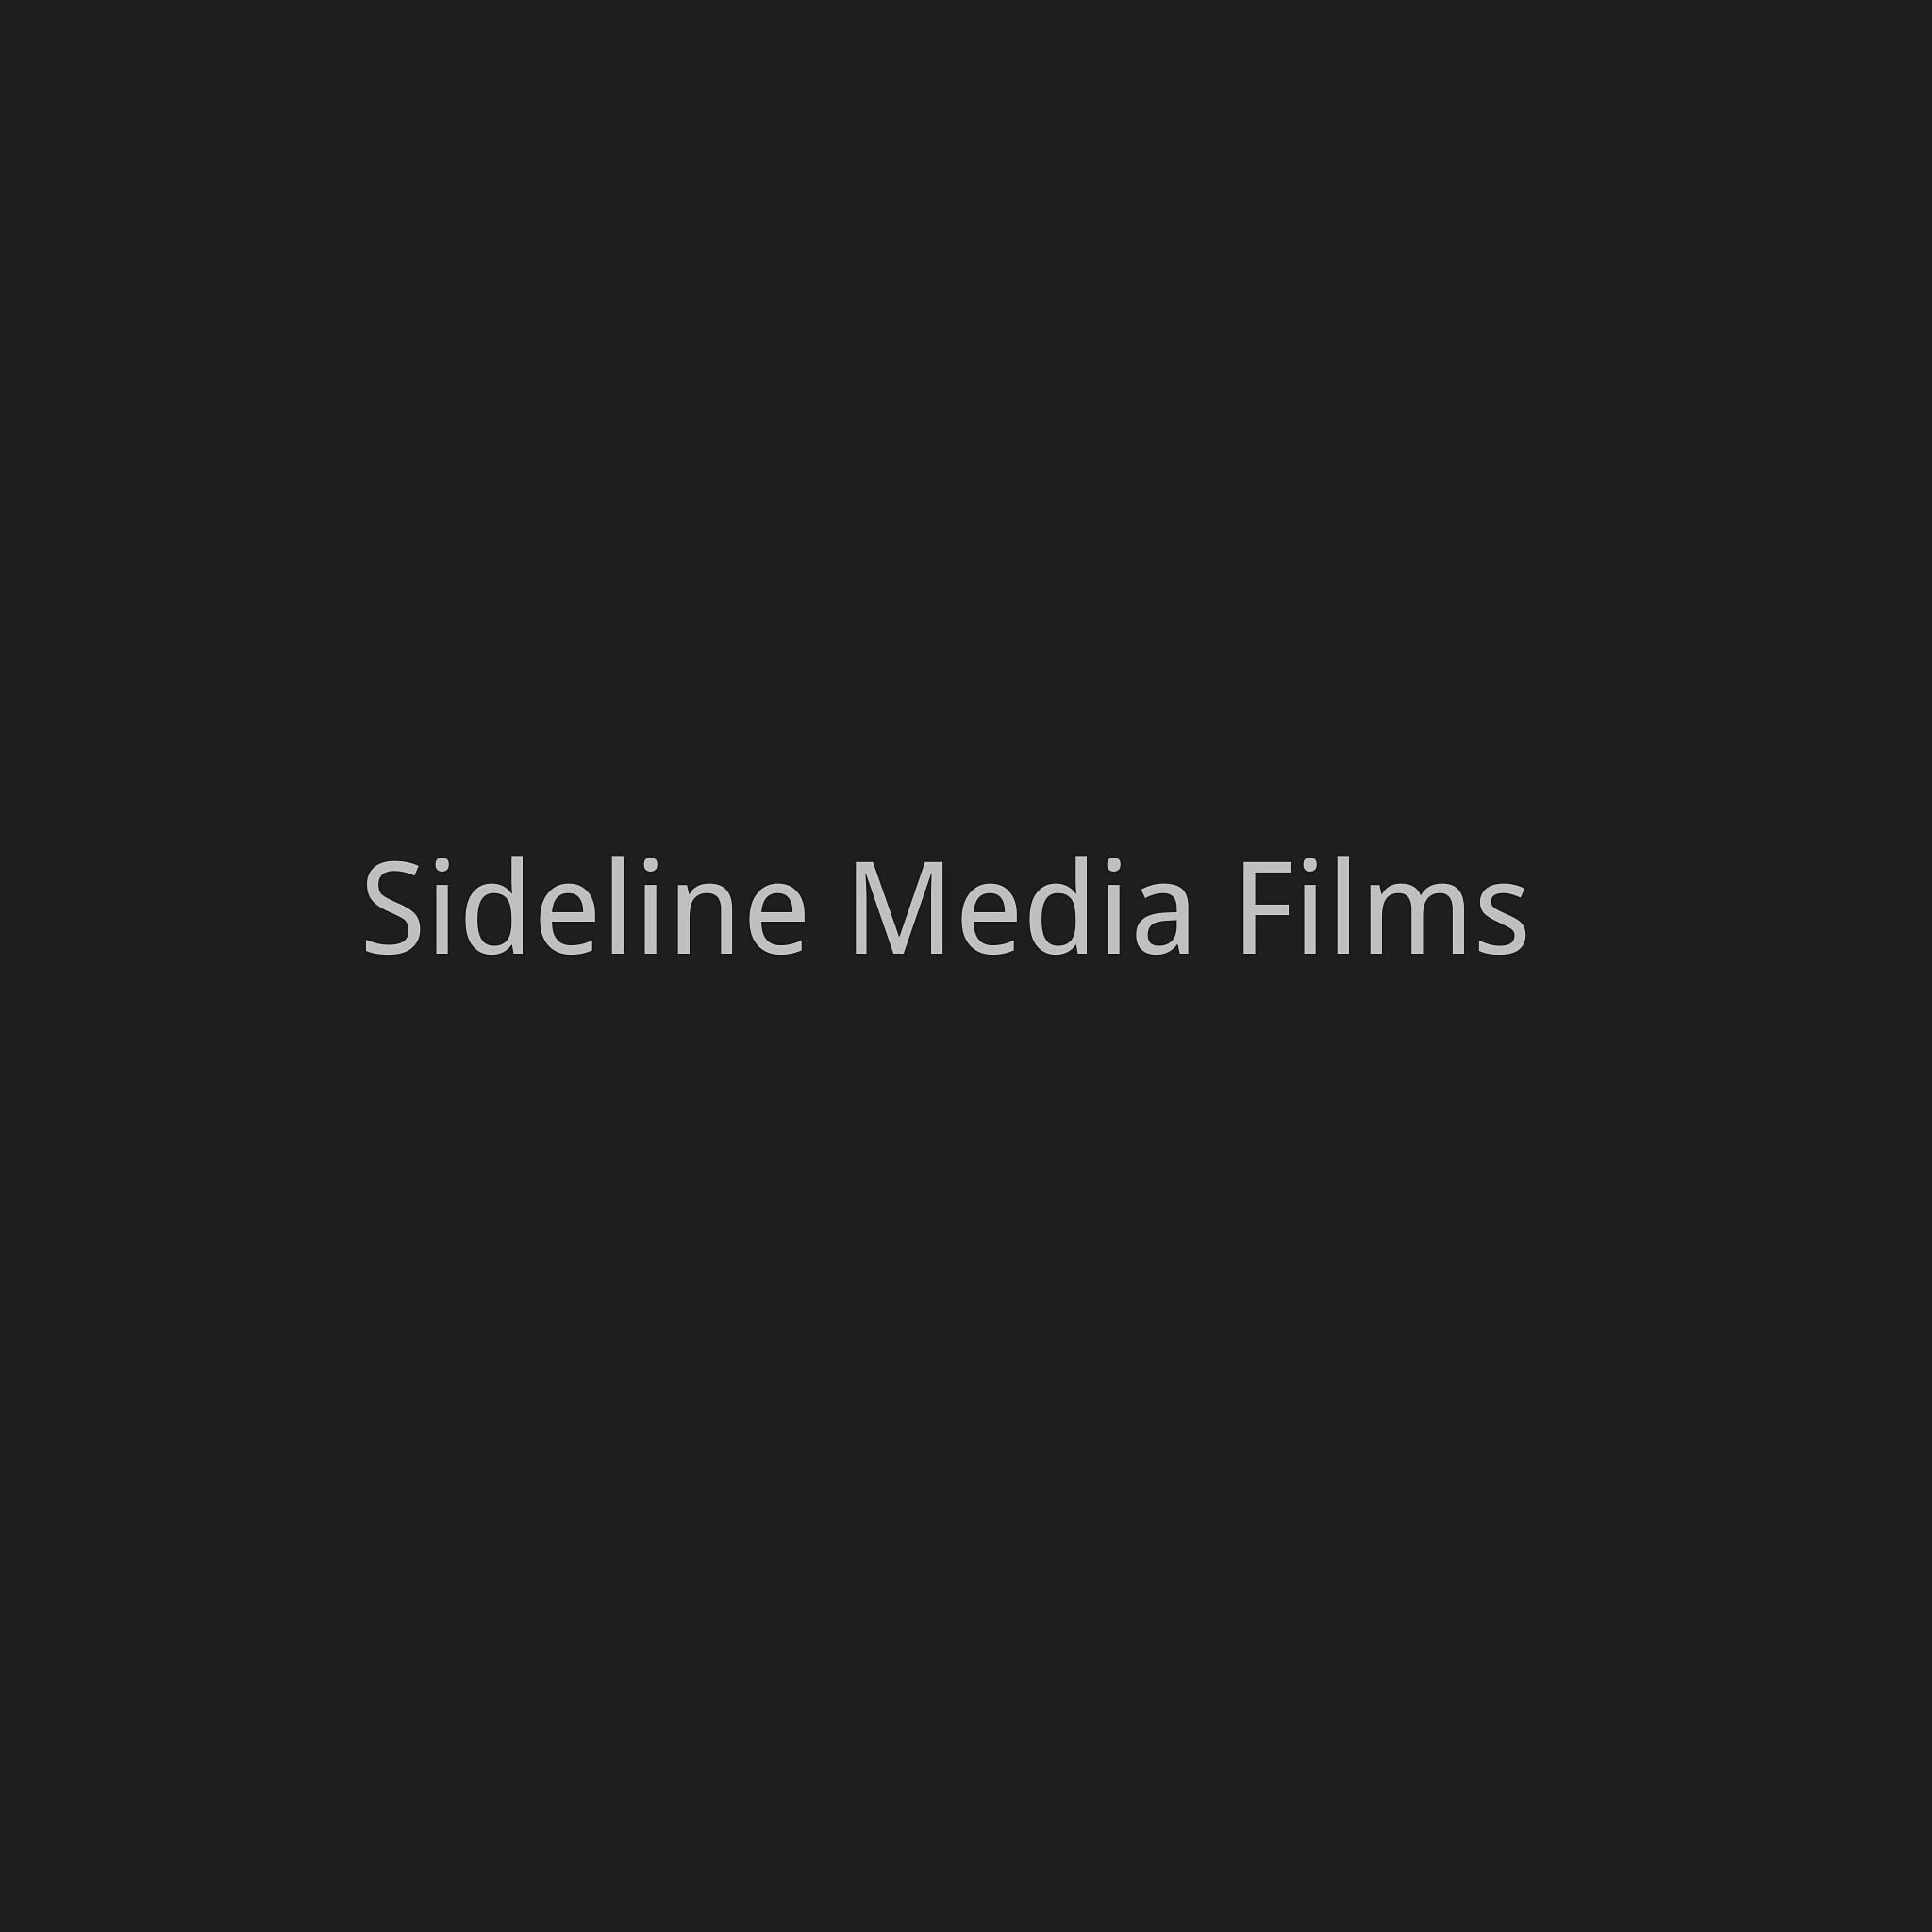 Sideline Media Films